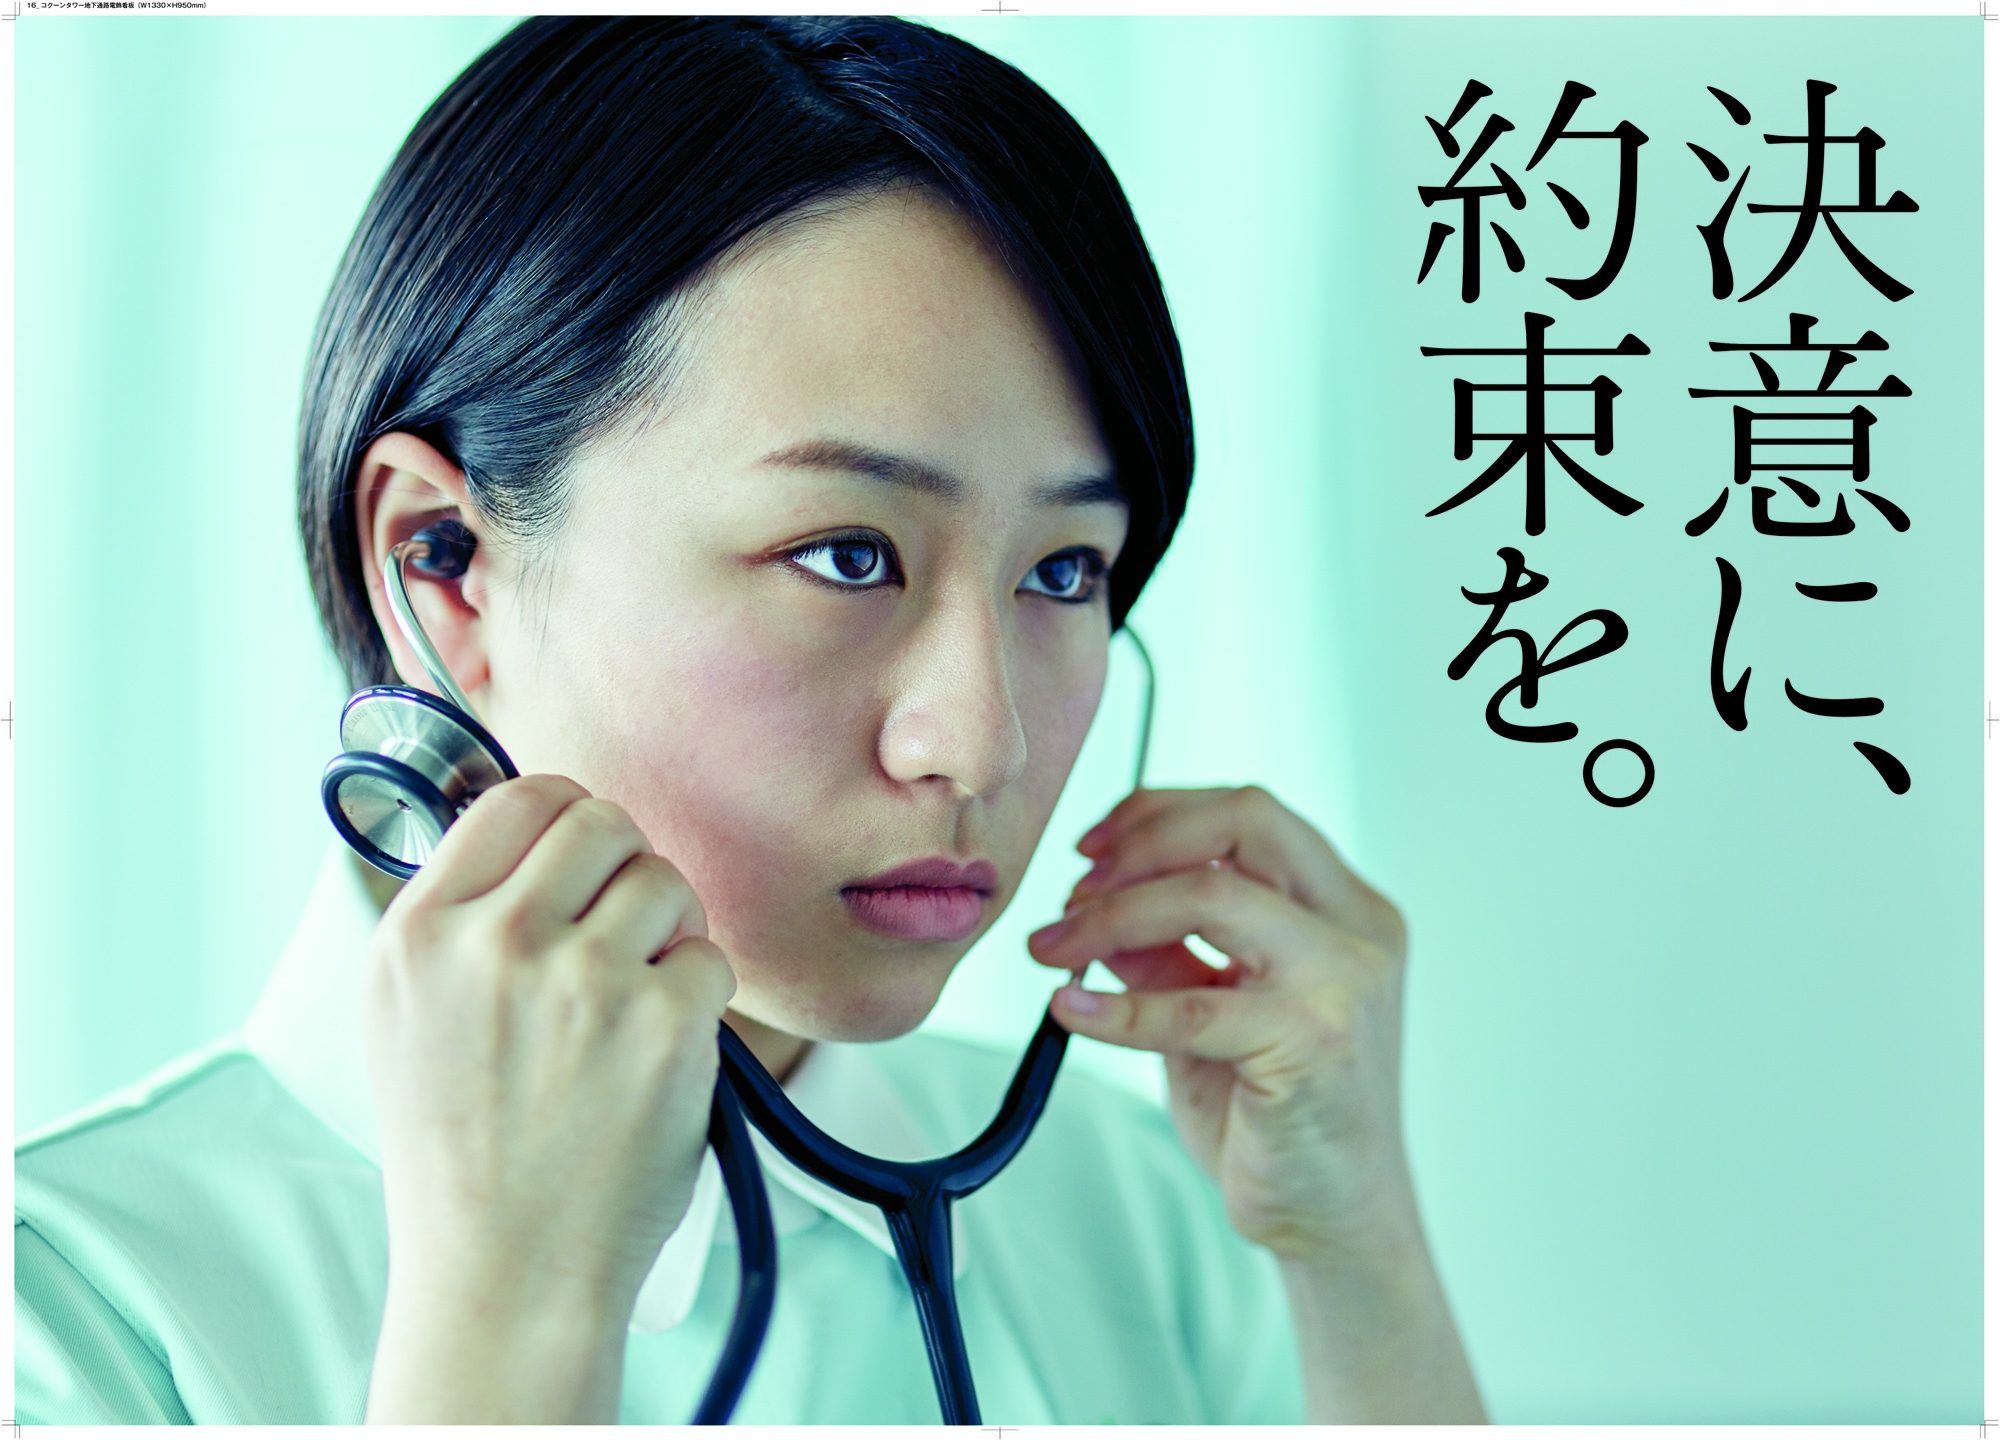 日本最大規模の医療系専門学校に4年制 高度専門看護学科 新設 学校法人 日本教育財団のプレスリリース